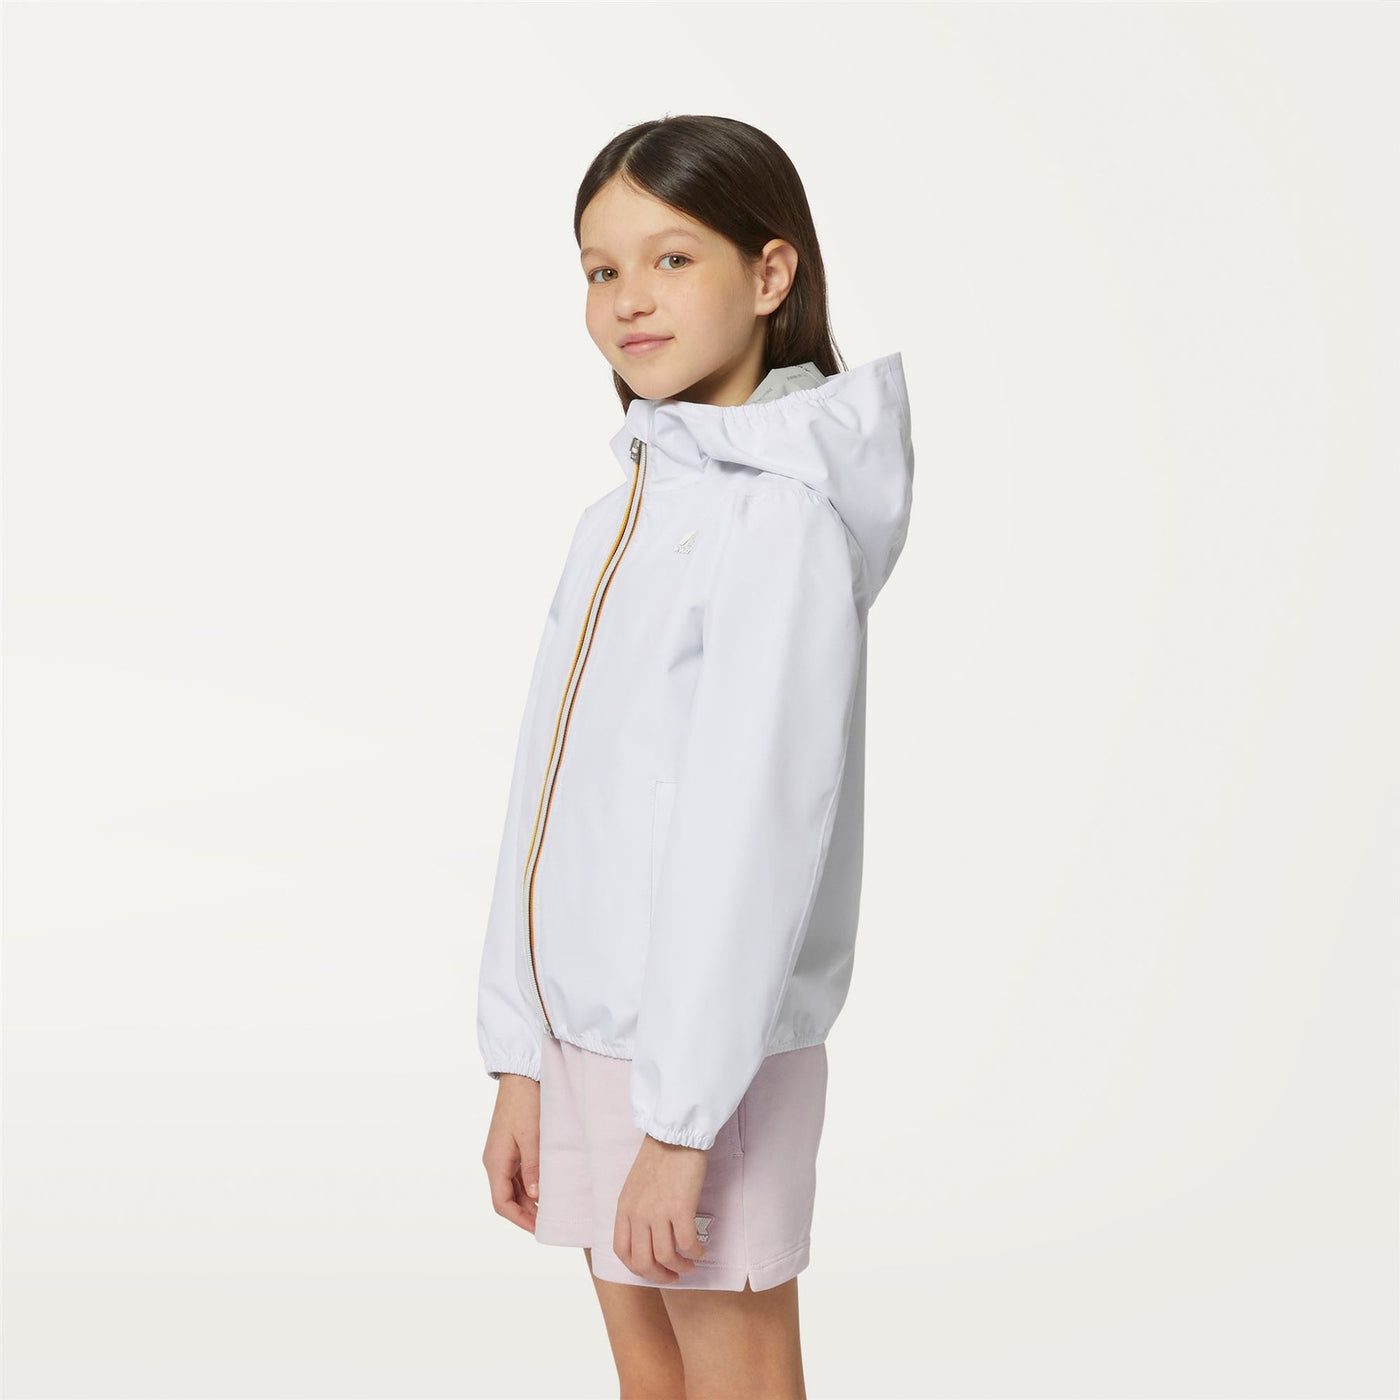 P.  LIL STRETCH DOT - Jacket - Polyester - Girl - White